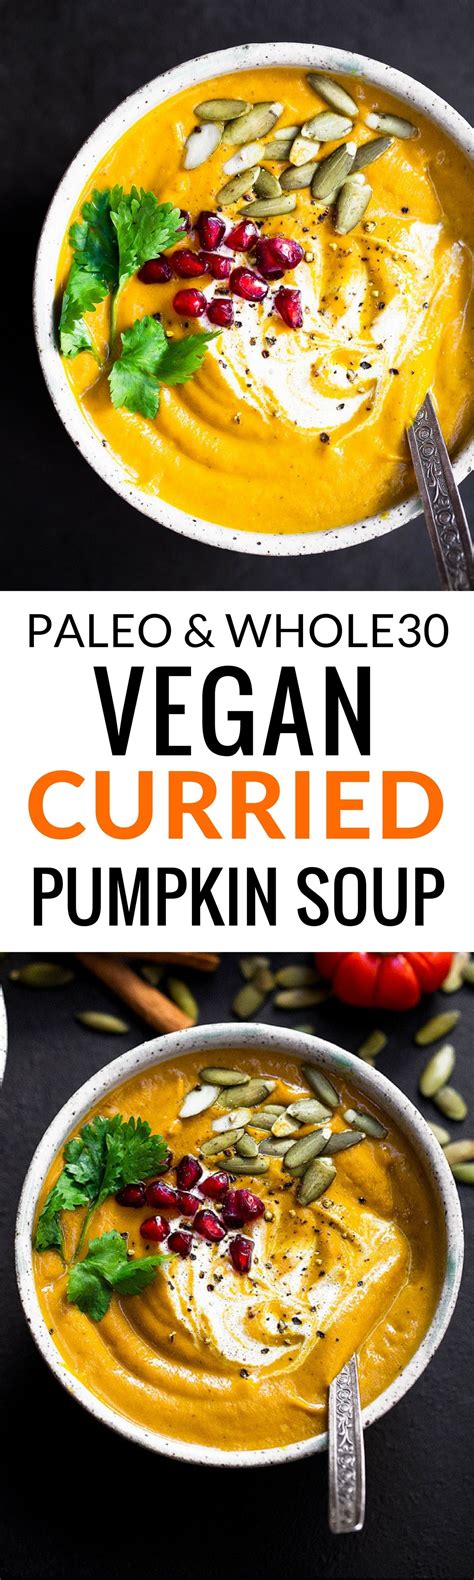 Easy Vegan Pumpkin Soup Recipe Pumpkin Soup Vegan